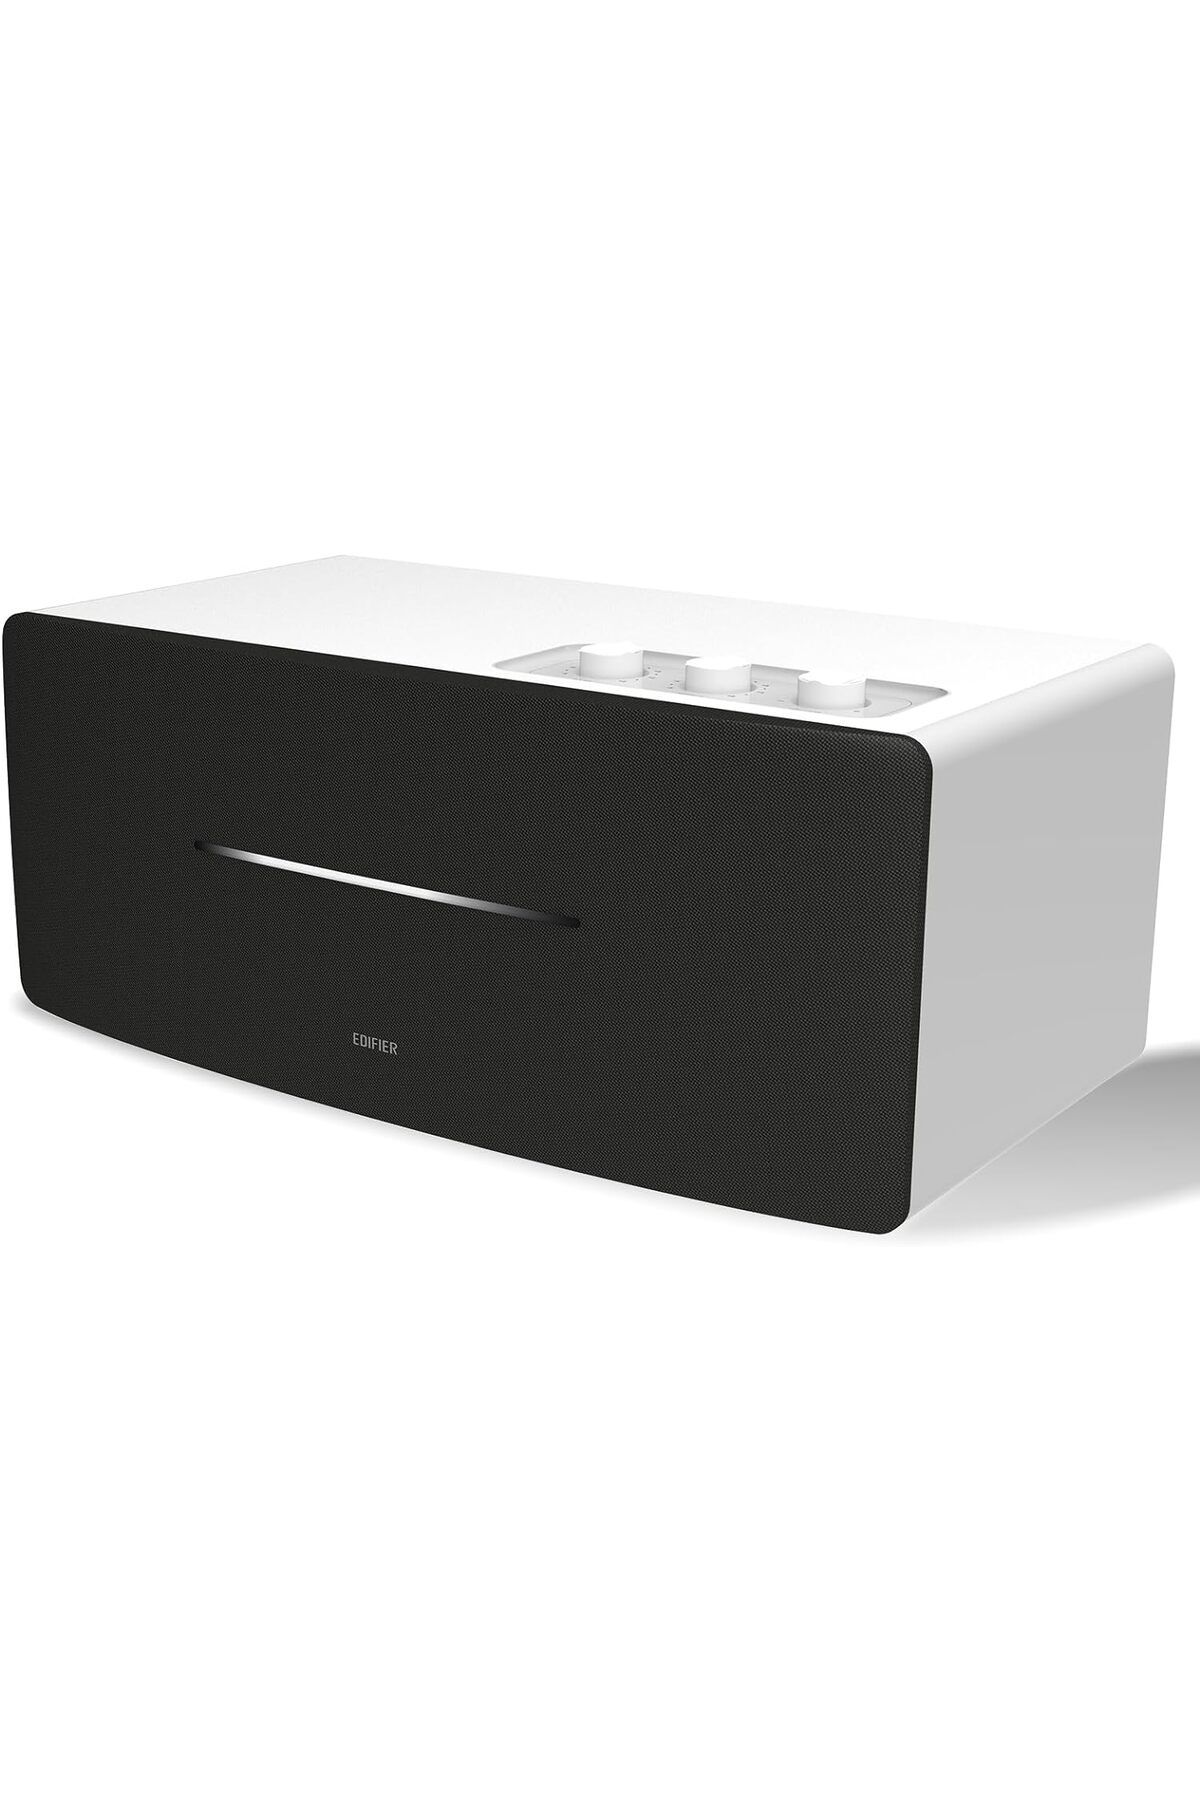 Edifier D12 kompakt stereo hoparlör sistemi (70 W), Bluetooth 5.0 ve kızılötesi uzaktan kumandalı